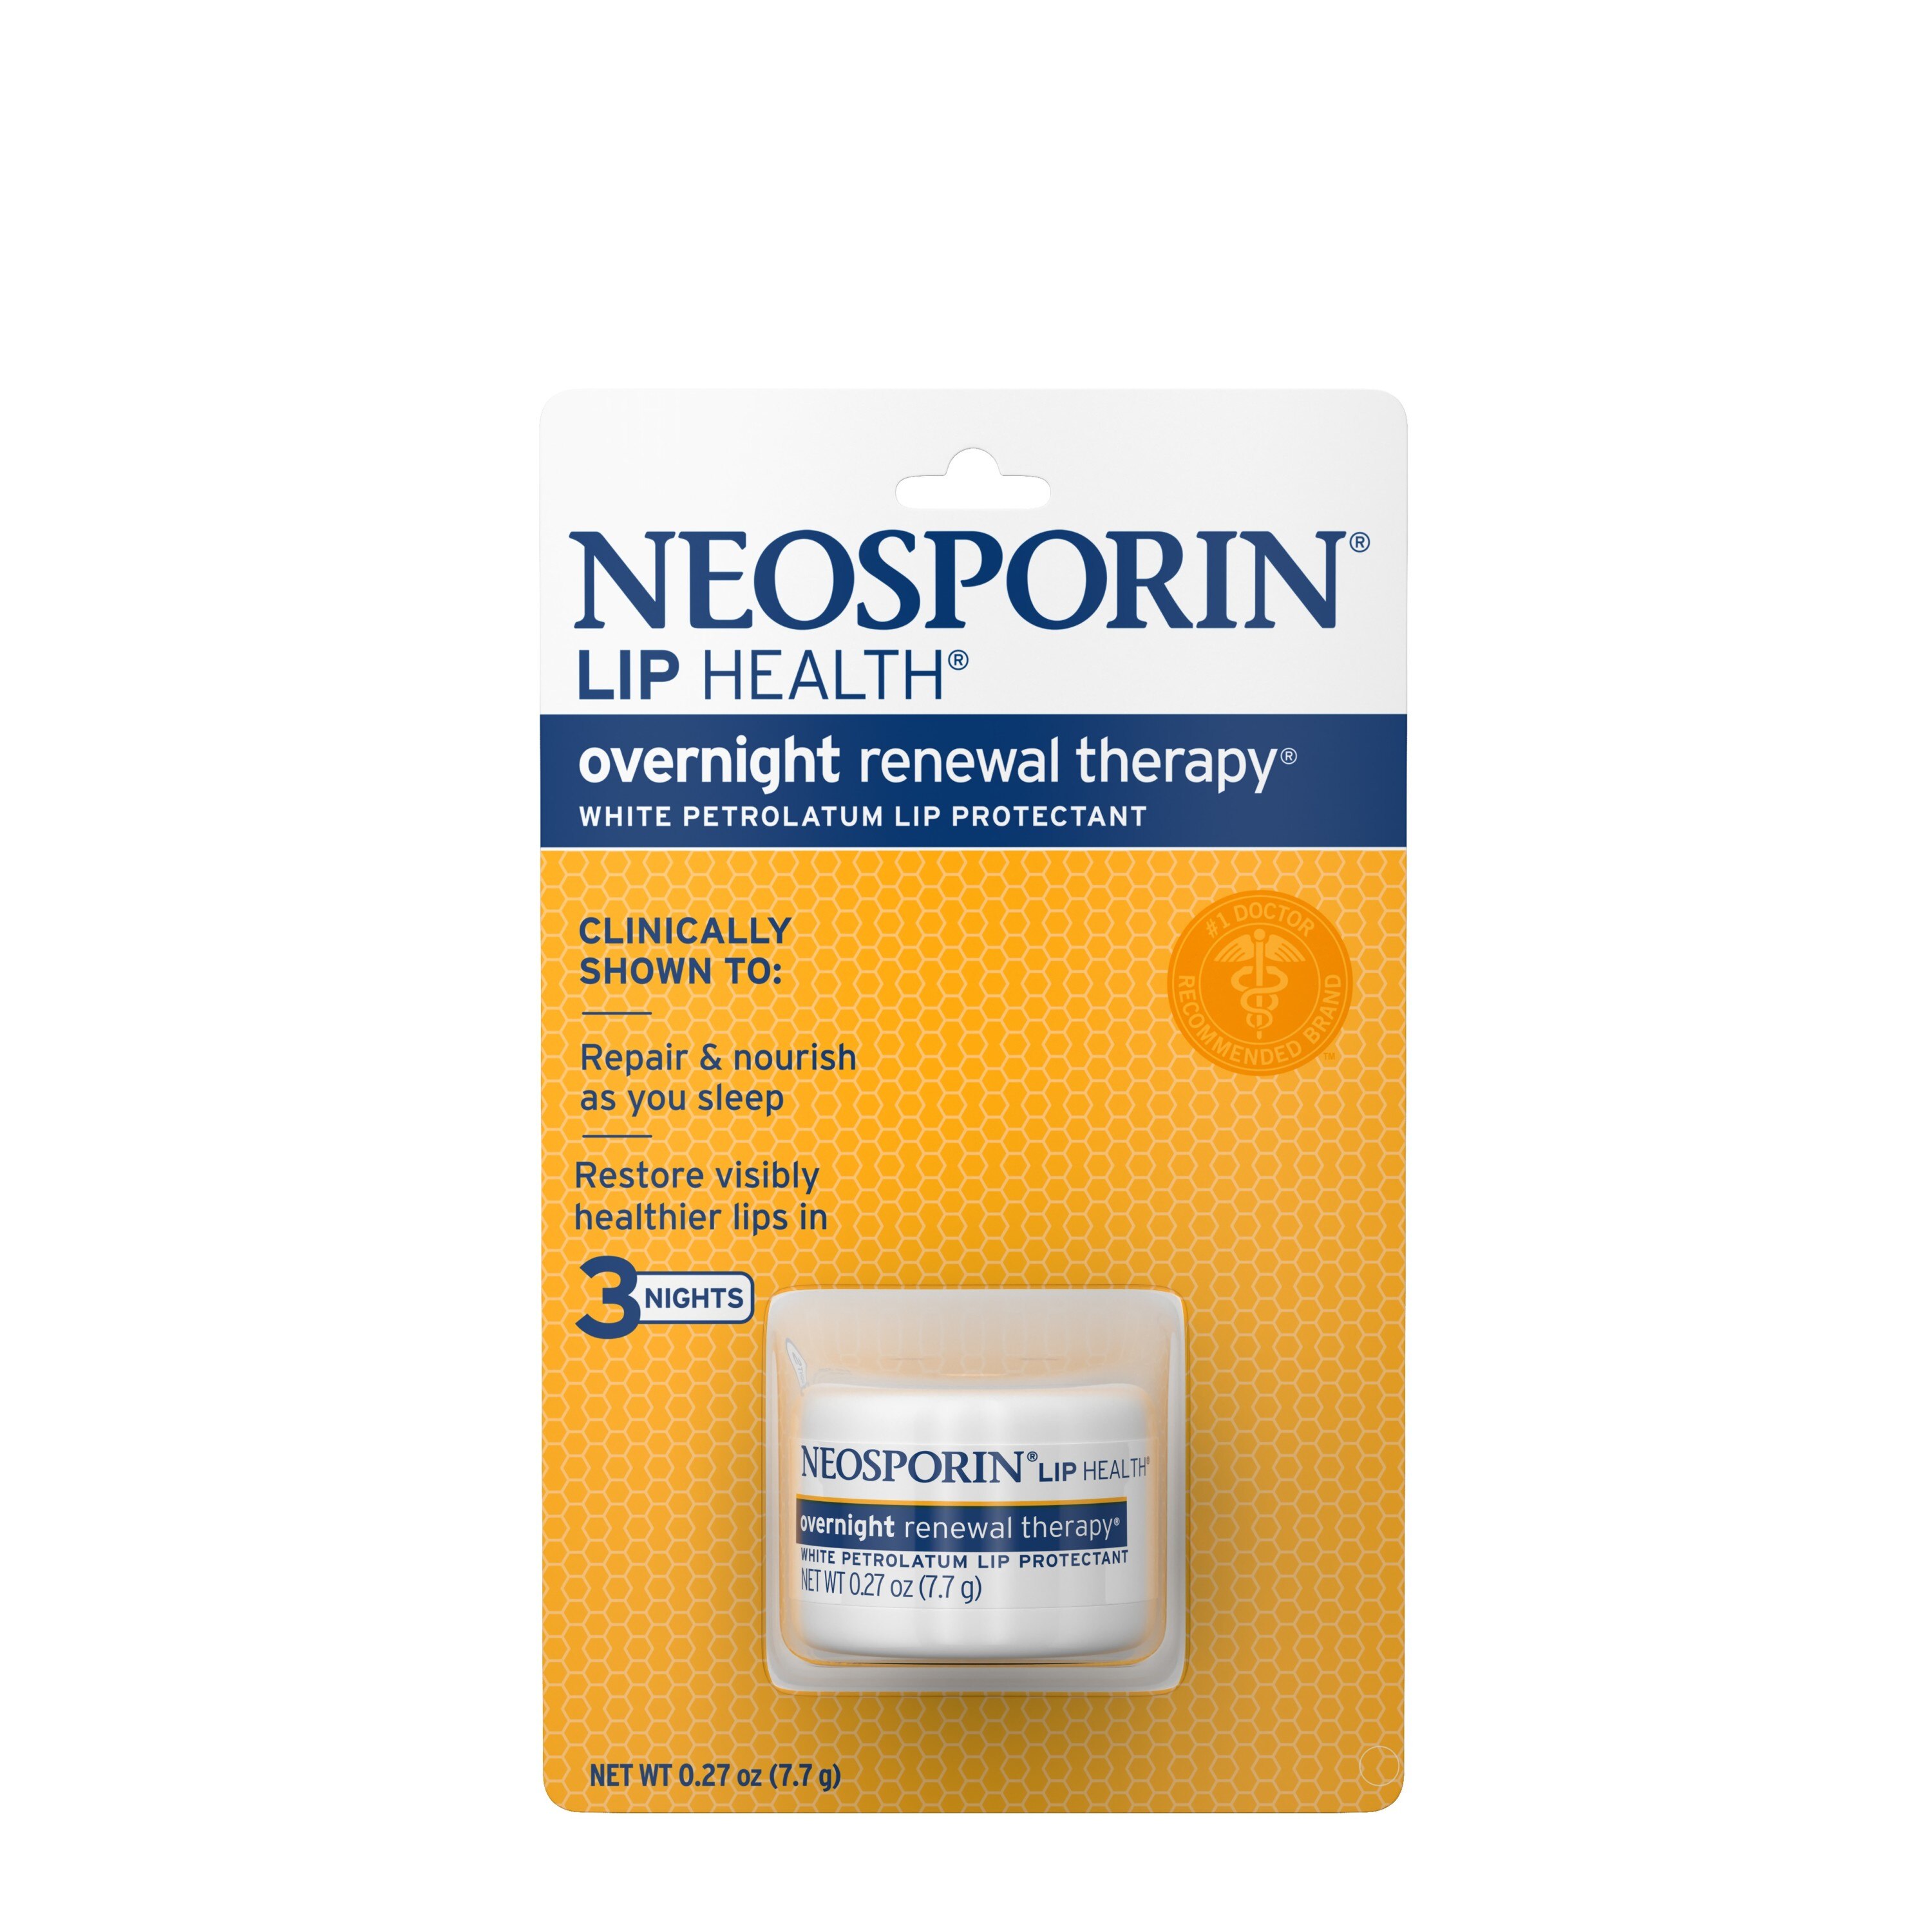 Neosporin Lip Health Overnight Renewal Therapy White Petrolatum Lip Protectant